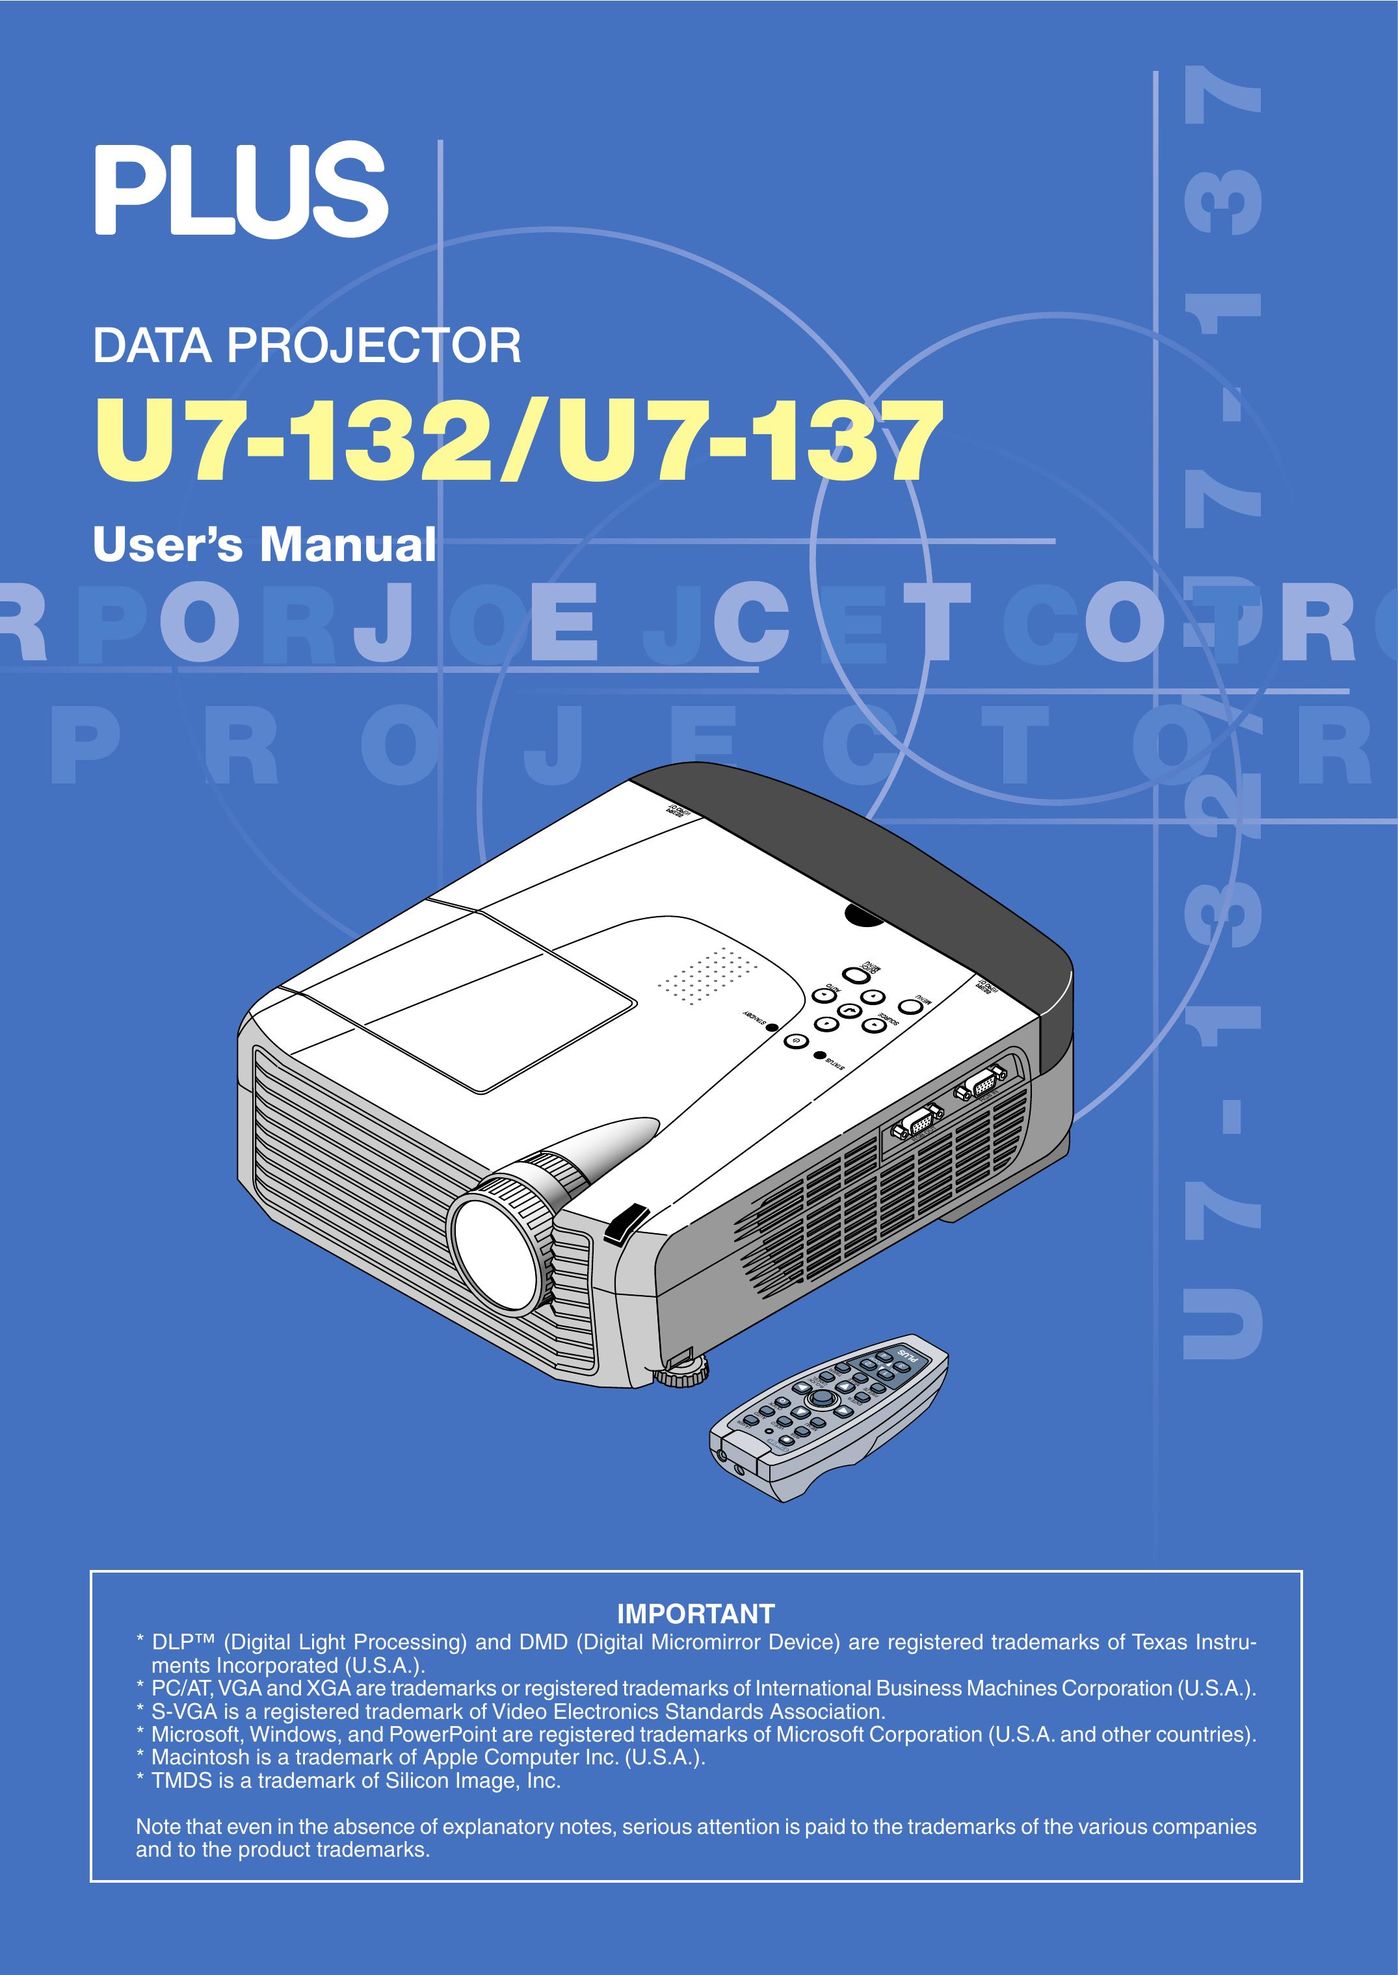 PLUS Vision U7-132/U7-137 Projector User Manual